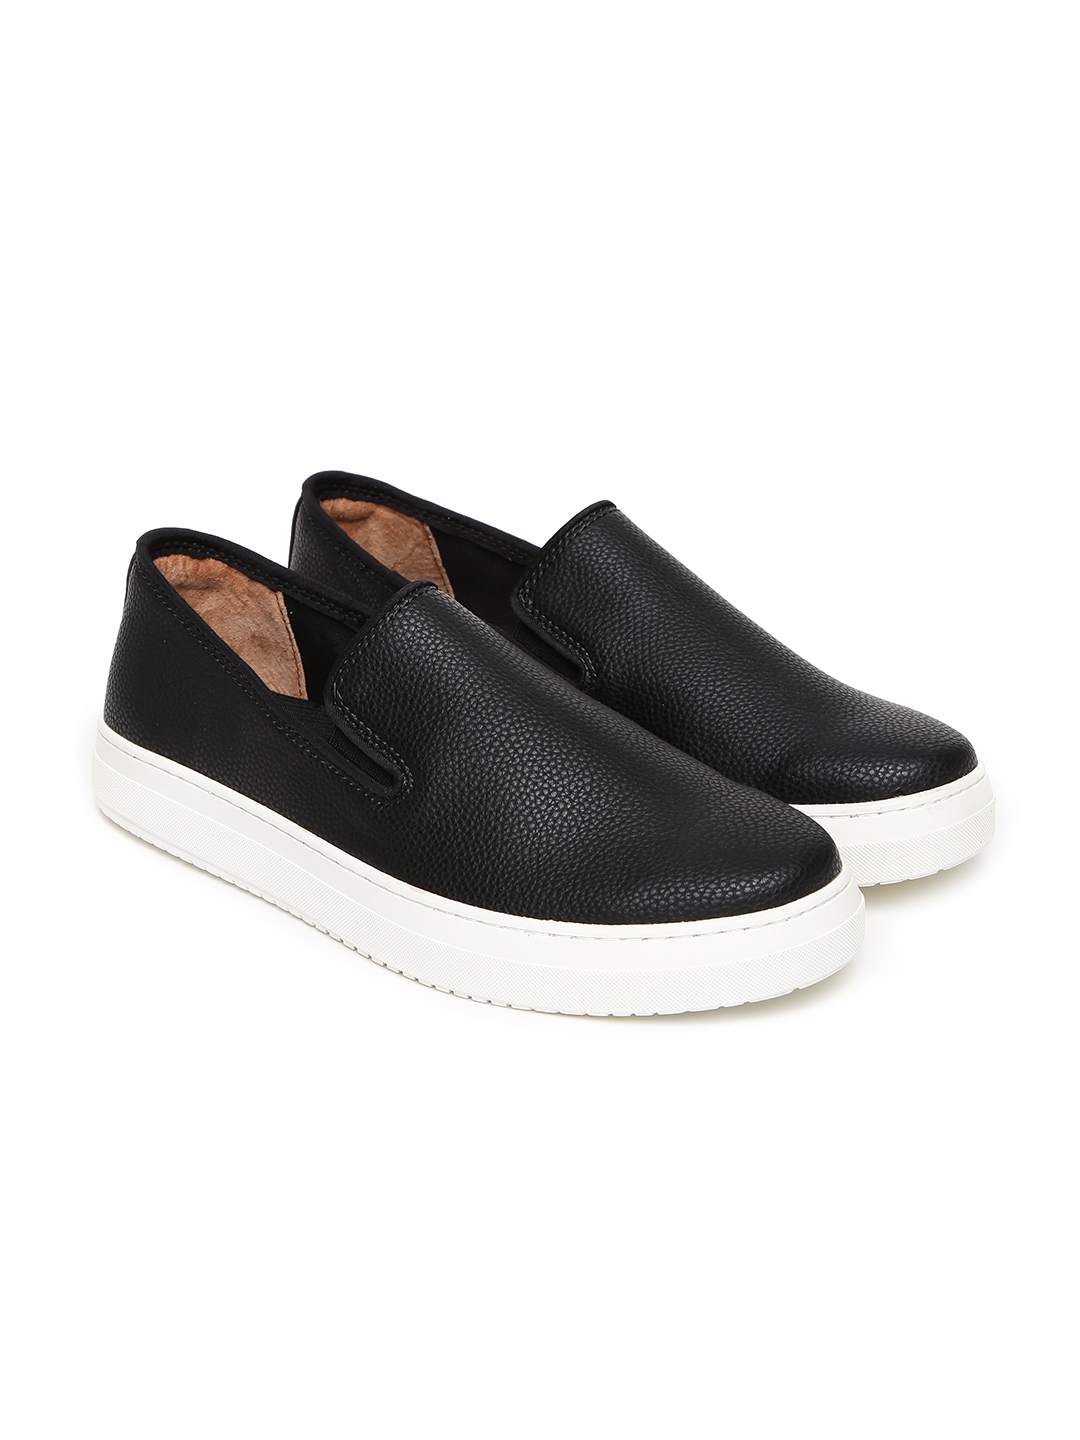 Buy Joy & Mario Men Black Slip On Sneakers - Casual Shoes for Men ...